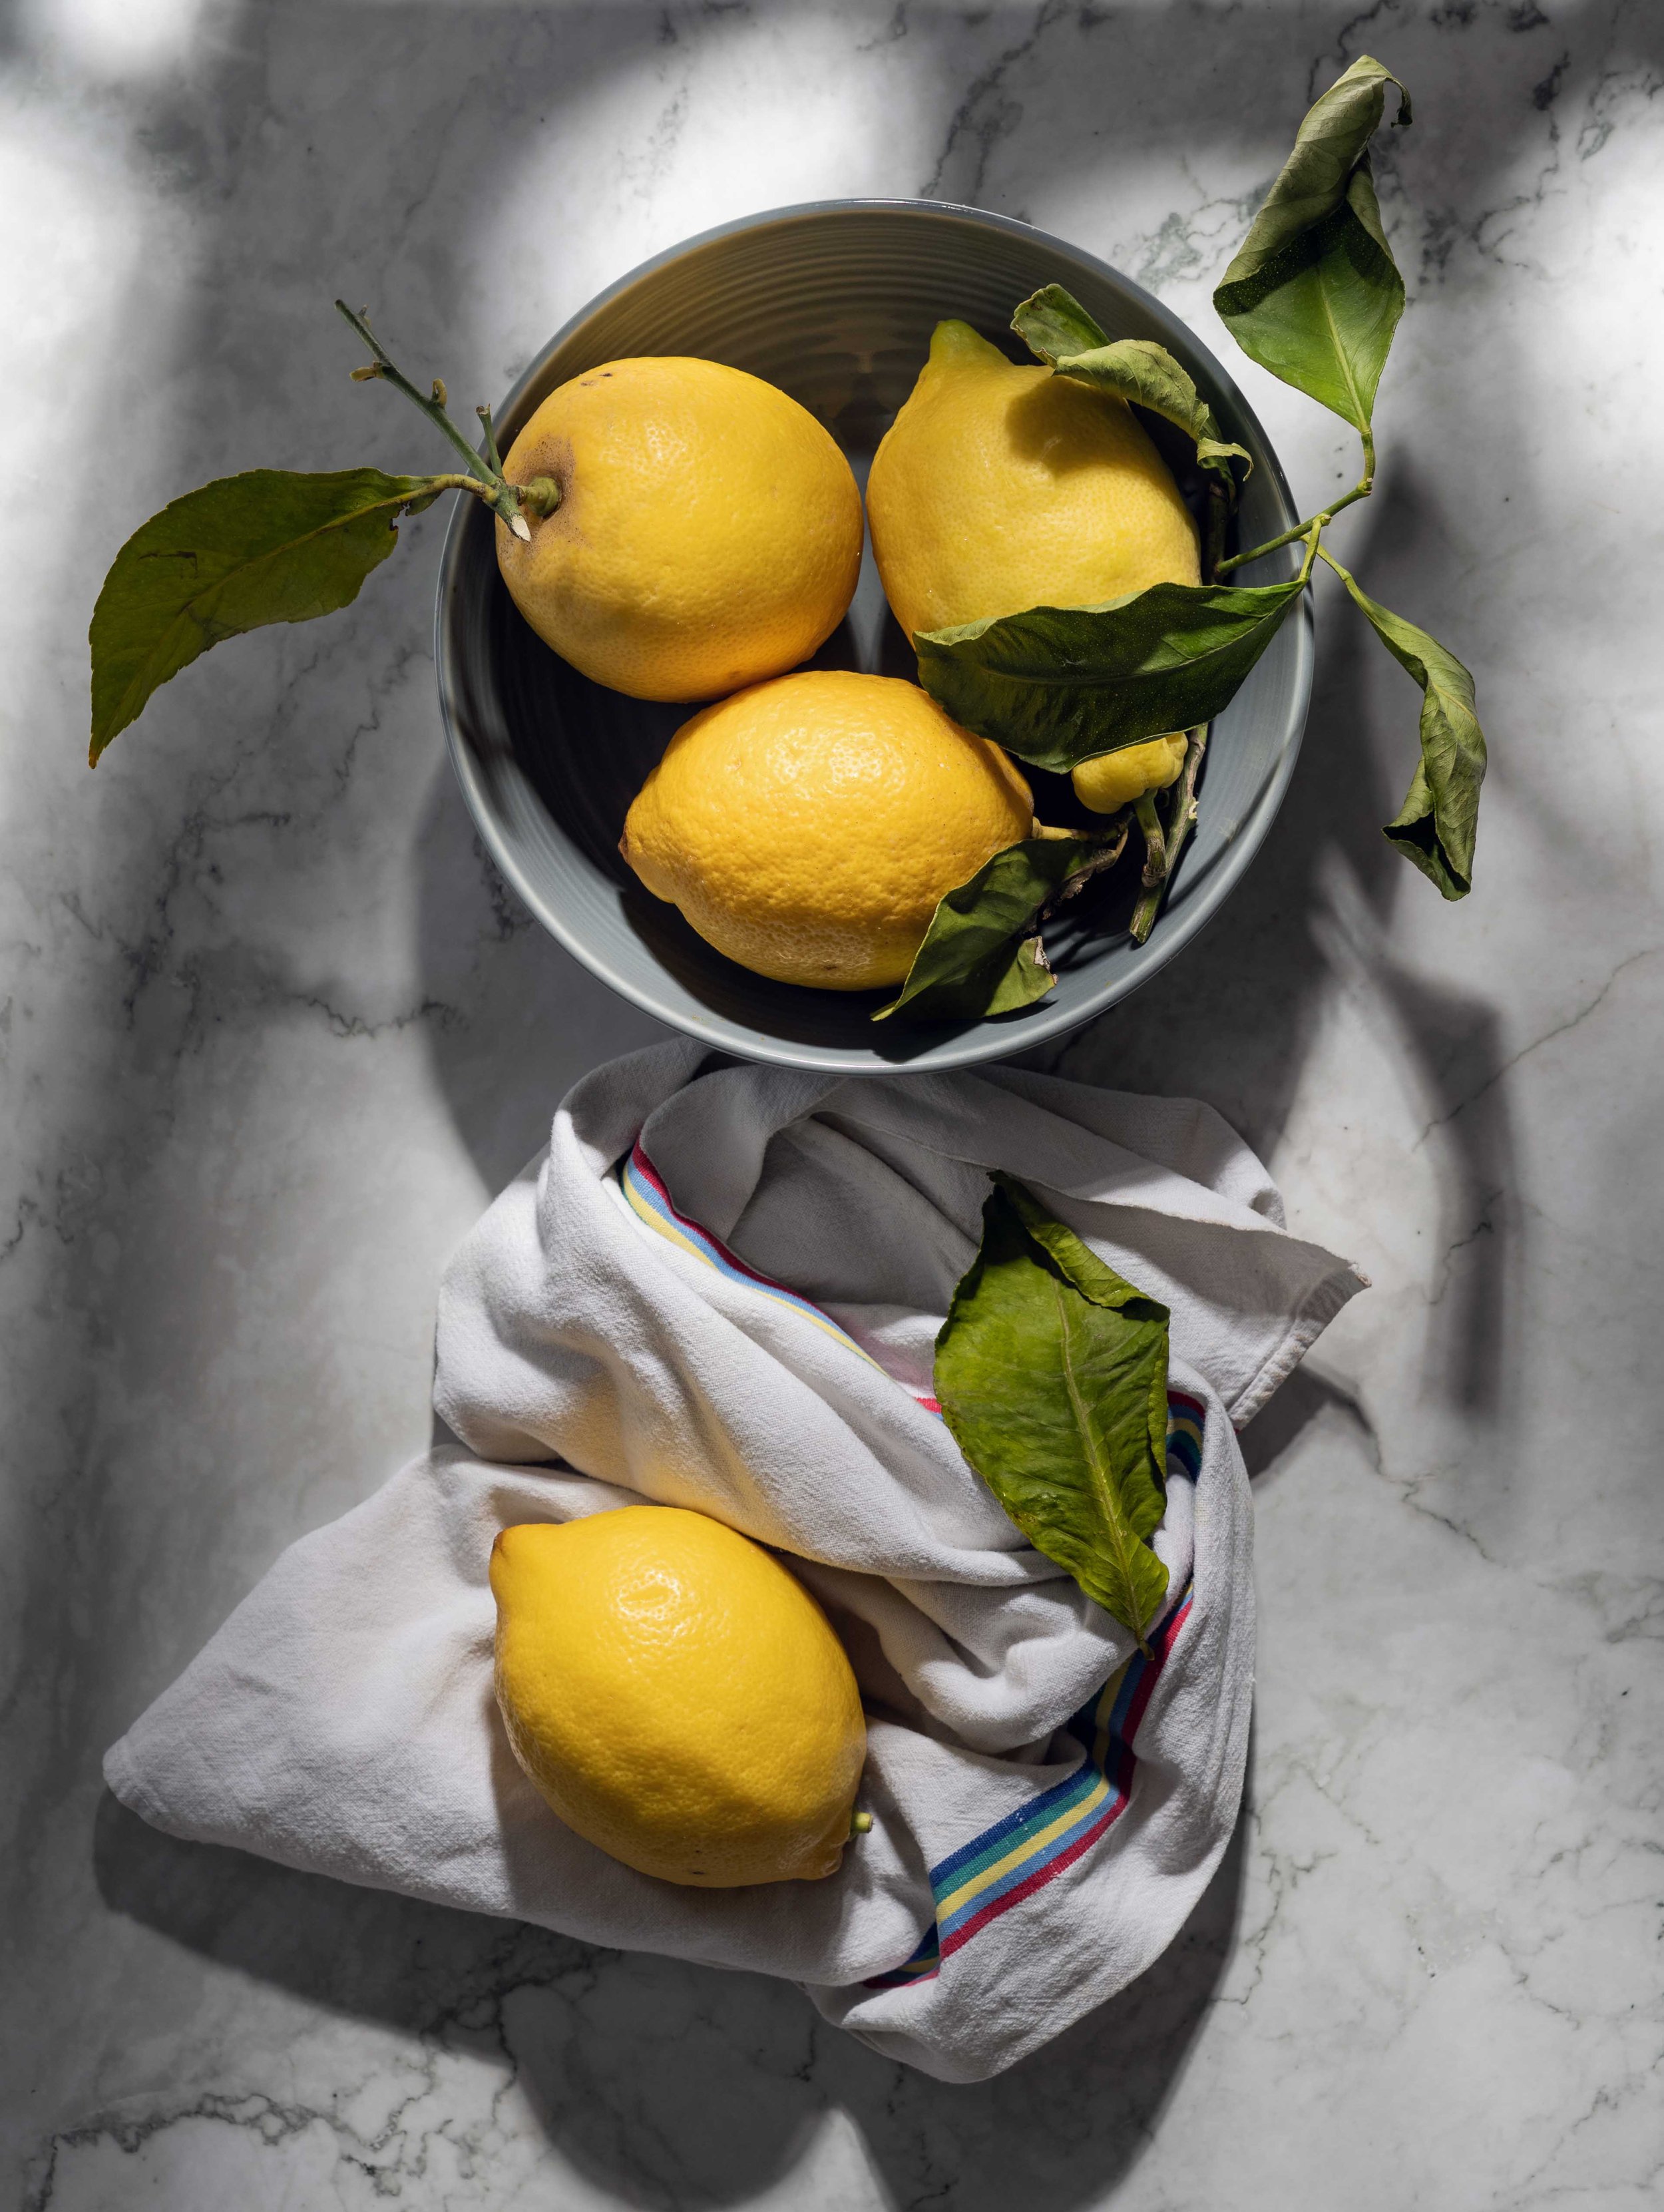 Jerome_Favre_Photography_Food_Drink_74_sicilian_lemons.jpg